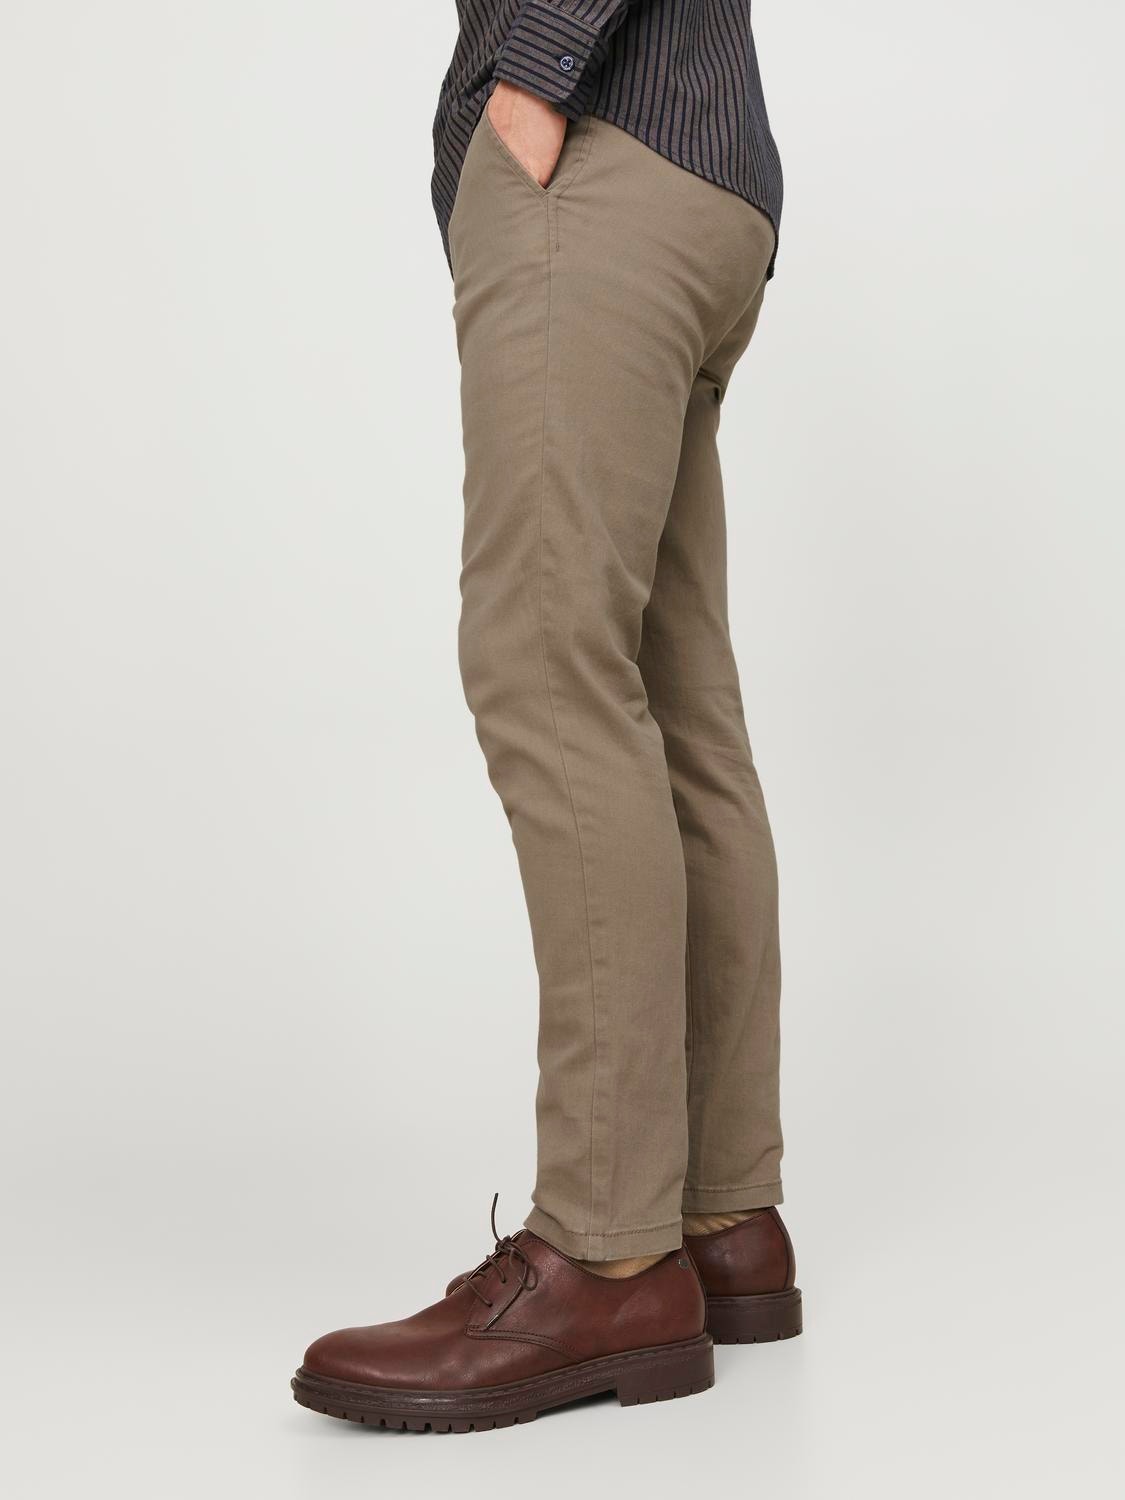 Jack & Jones Slim Fit Spodnie chino -Beige - 12174307